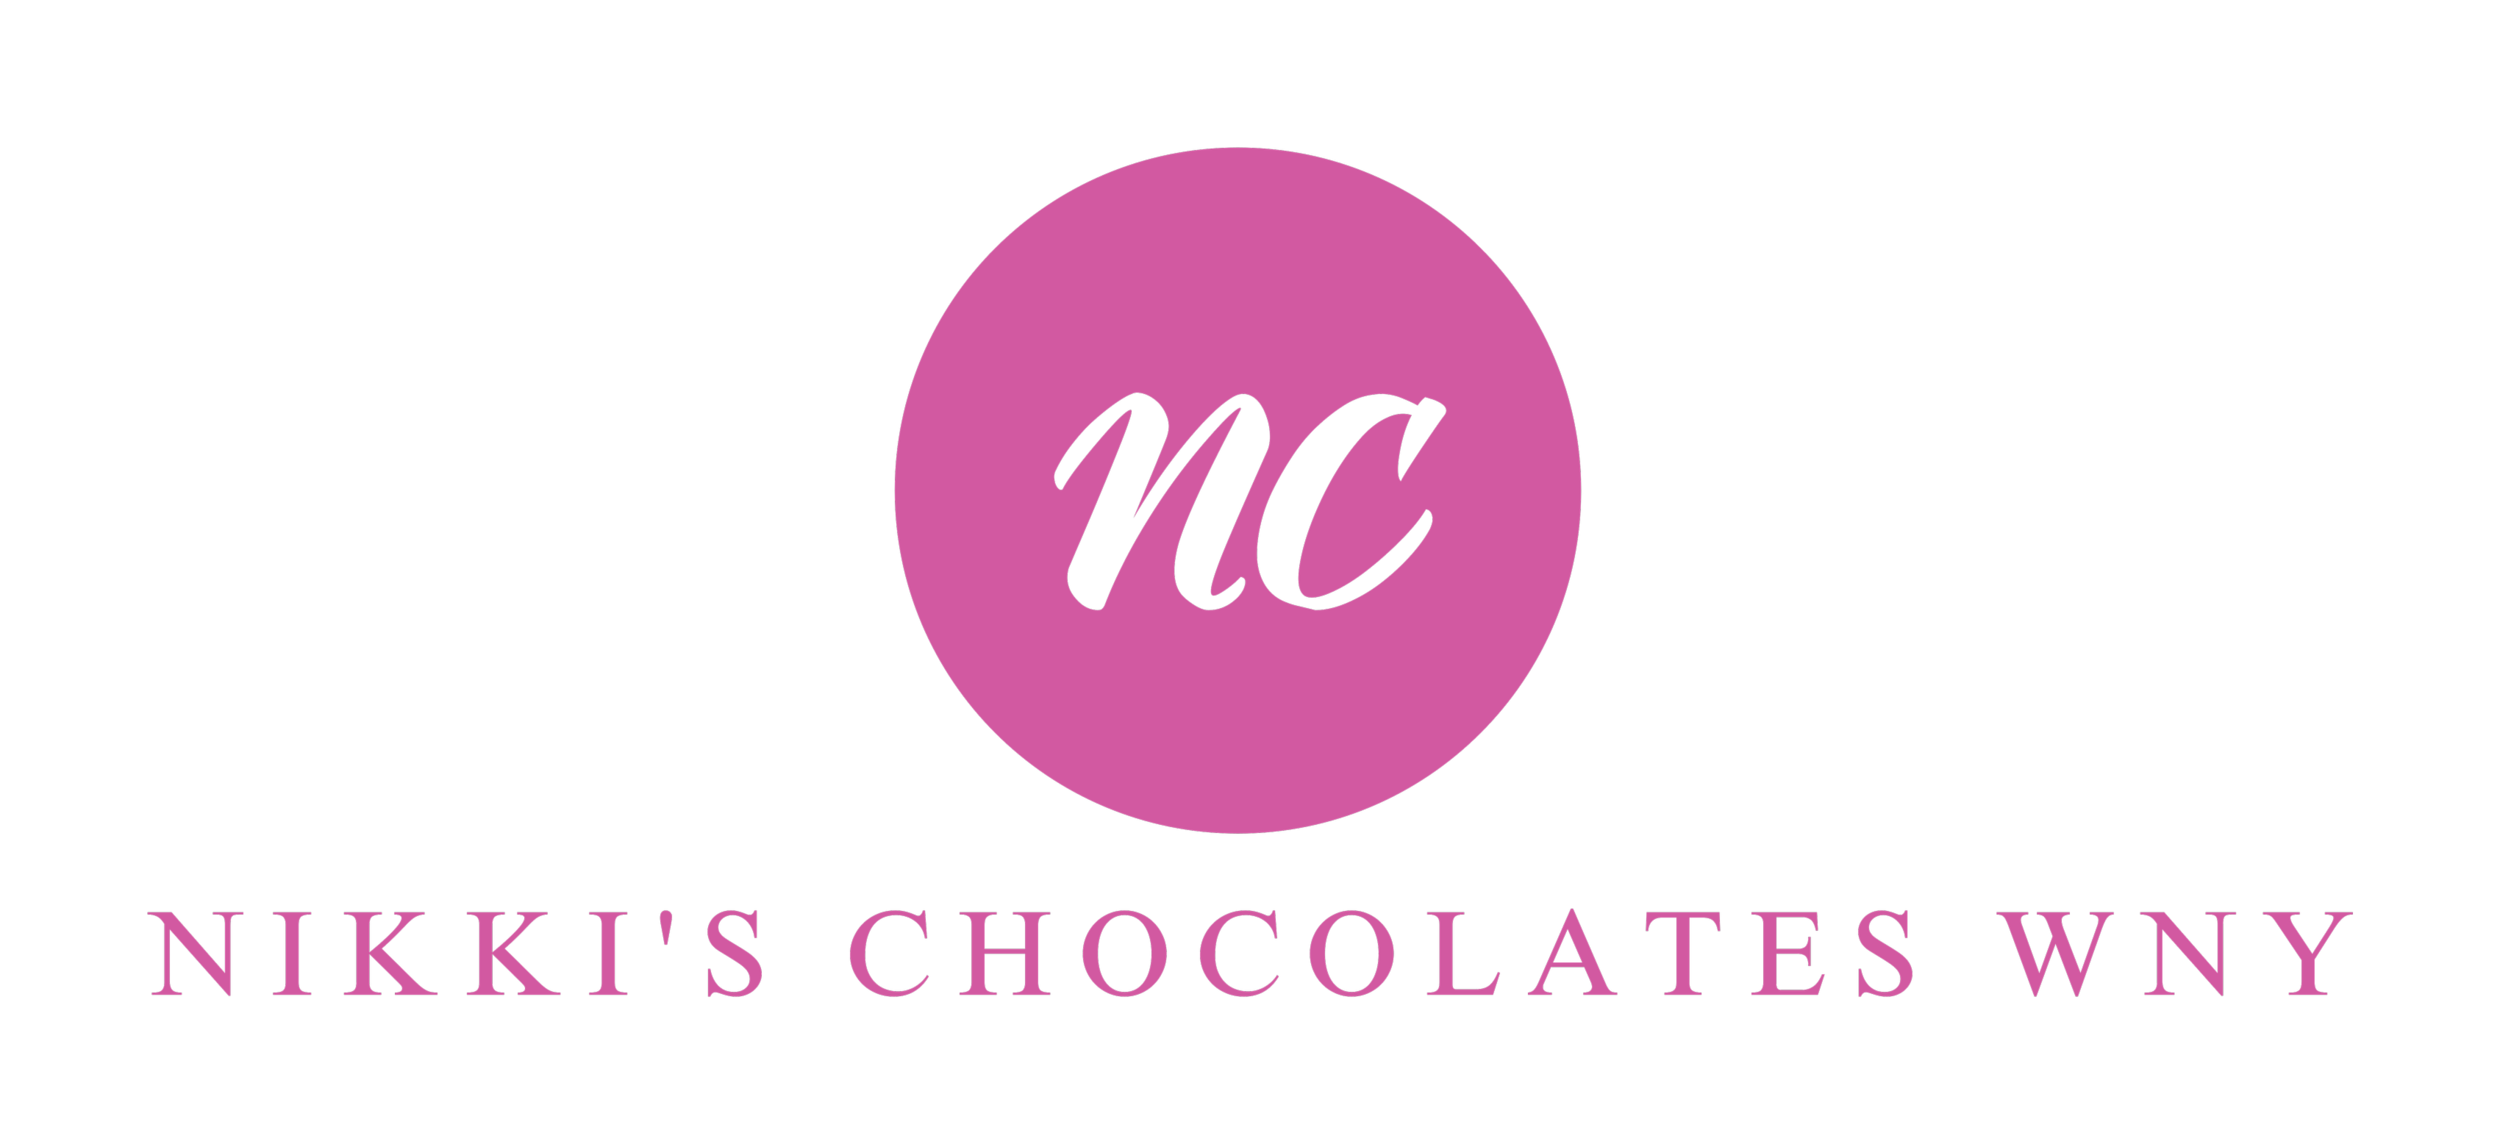 Nikki's Chocolates WNY, LLC